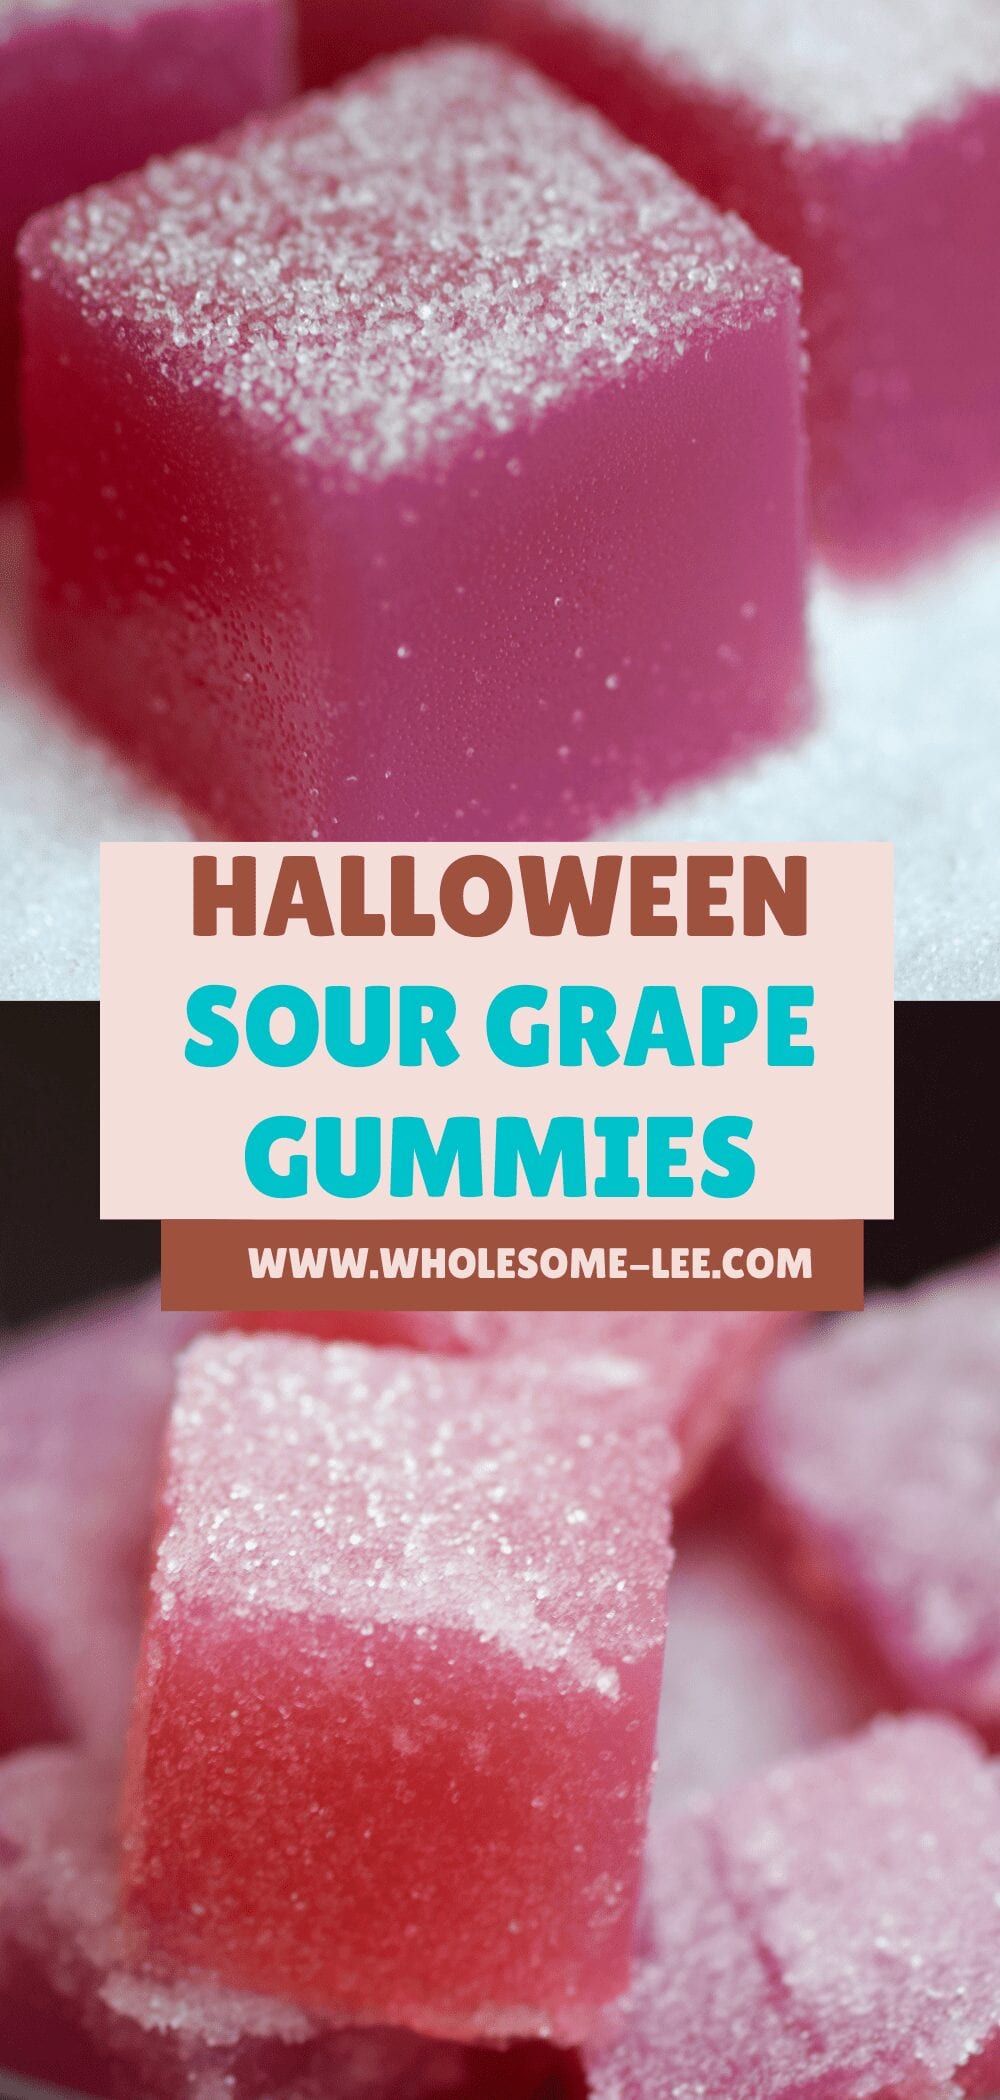 Halloween sour grape gummies